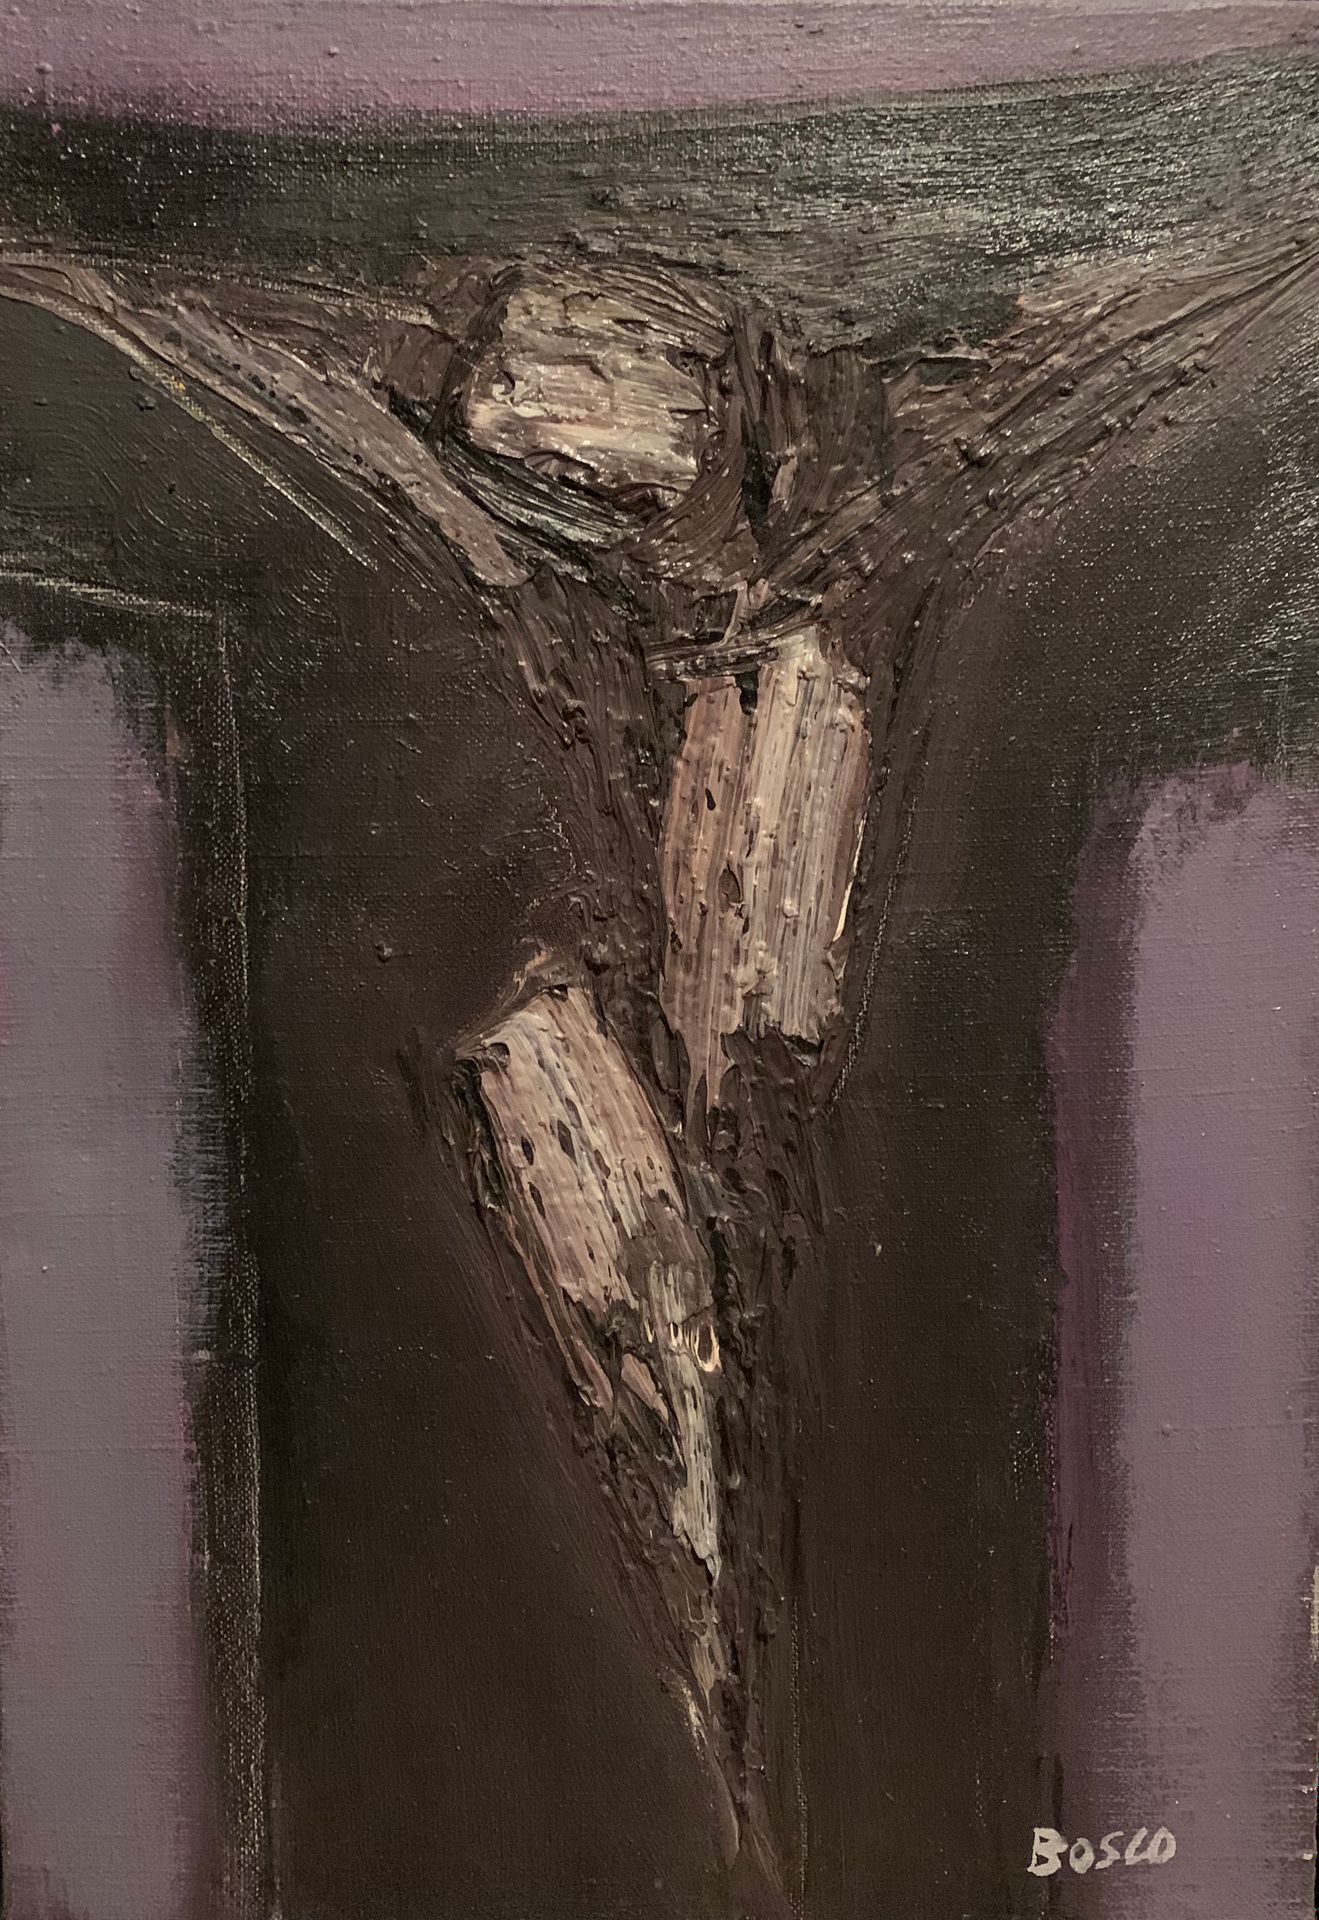 Null 皮埃尔-博斯克 (1909-1993)

基督在十字架上

布面油画，右下角有签名

46 x 32 cm